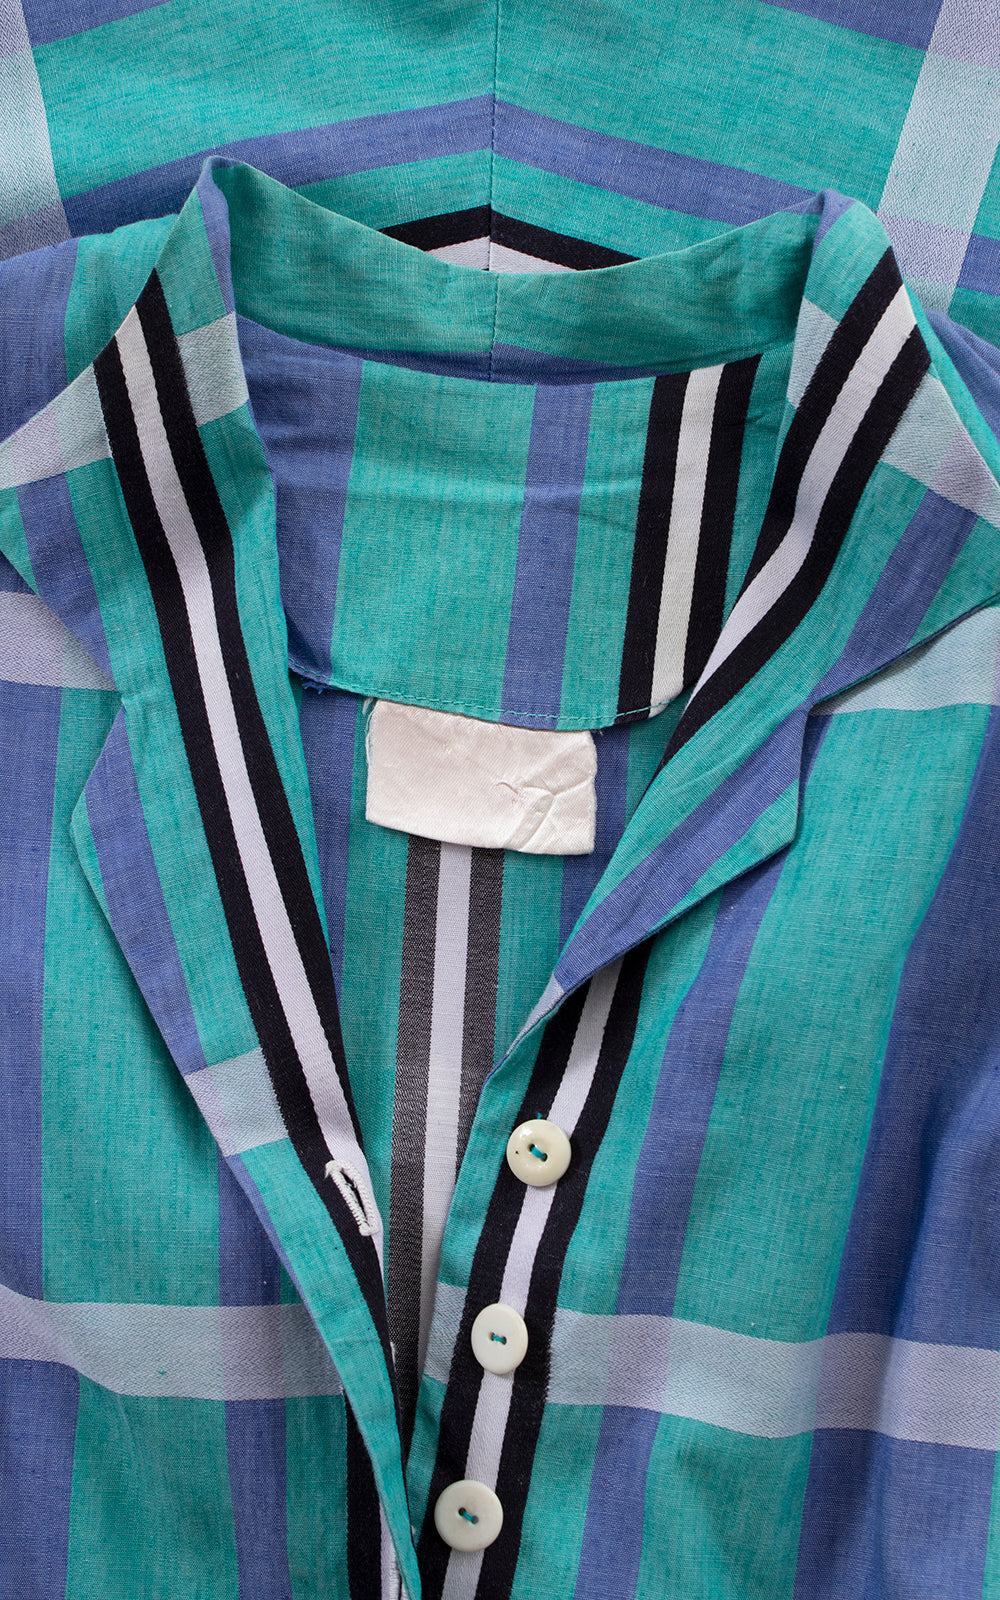 1940s 1950s Plaid Cotton Shirtwaist Dress with Pocket | large